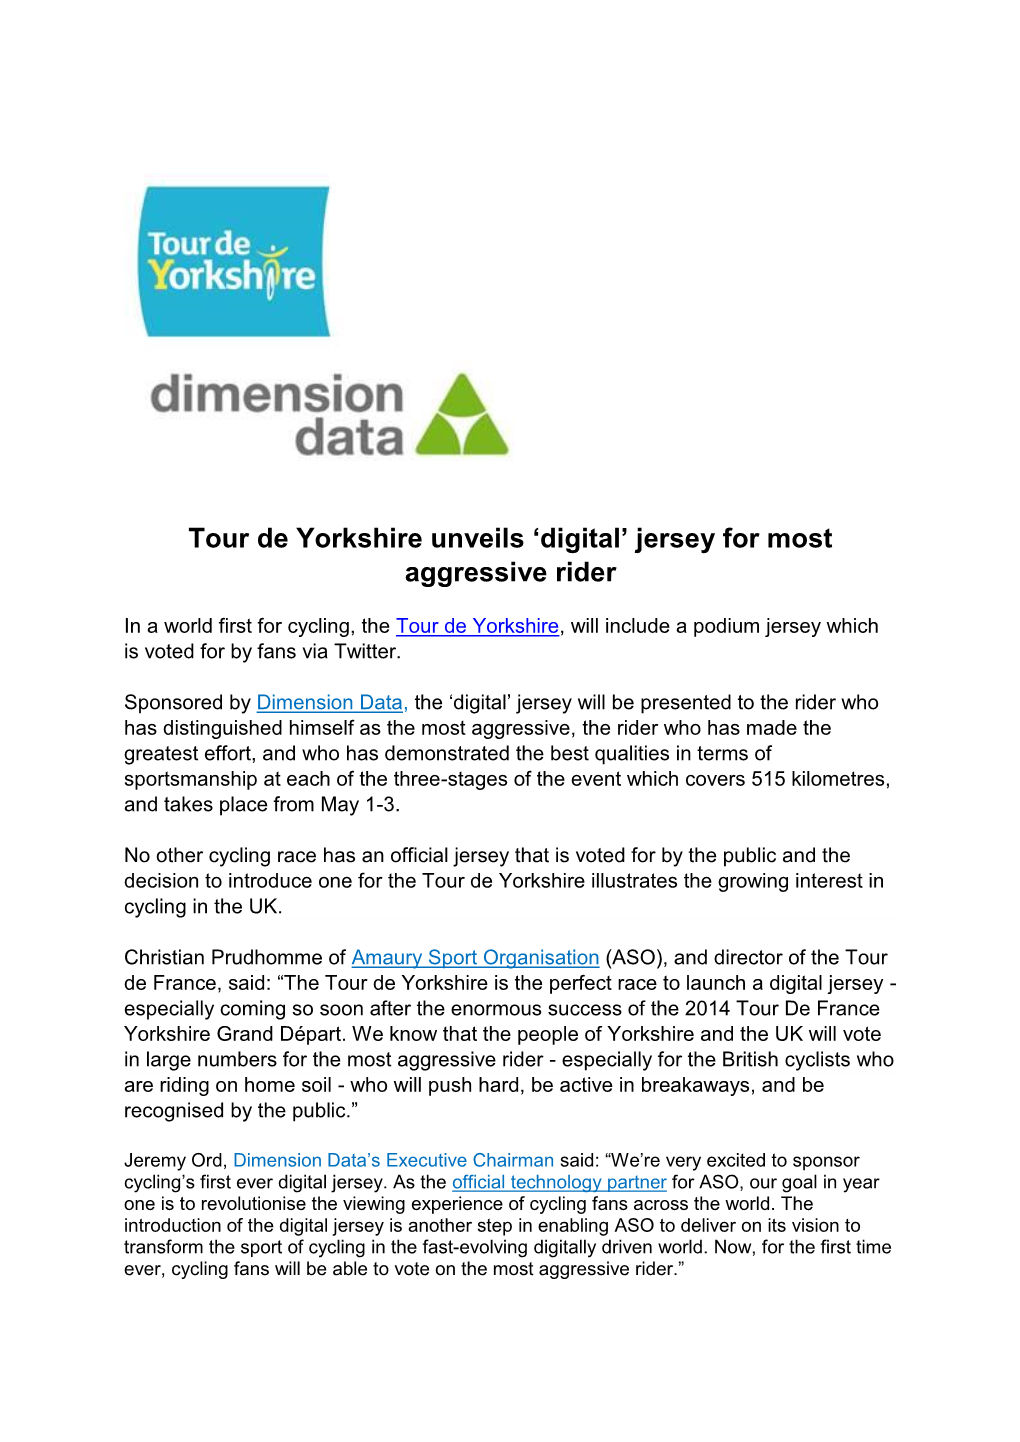 Tour De Yorkshire Unveils 'Digital' Jersey for Most Aggressive Rider